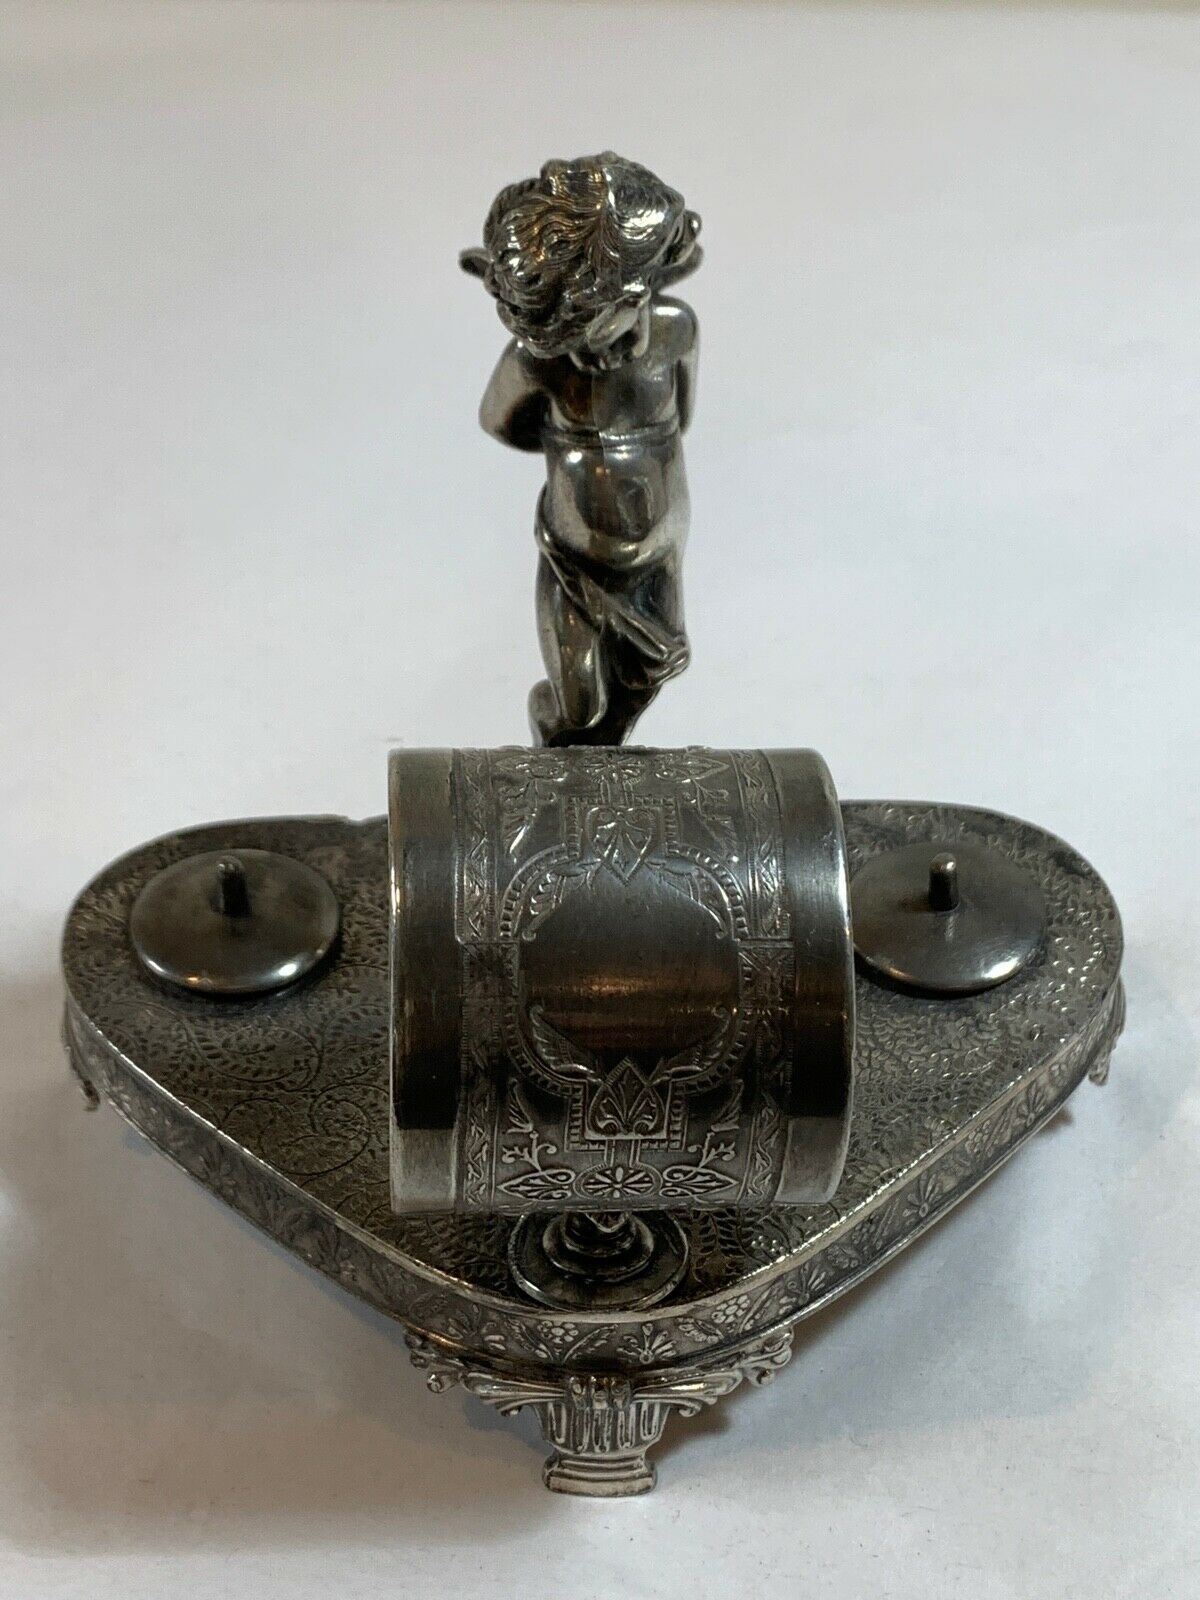 James Tufts Silver Plate Figural Cherub Ring Holder (missing Open Salt & Shaker)